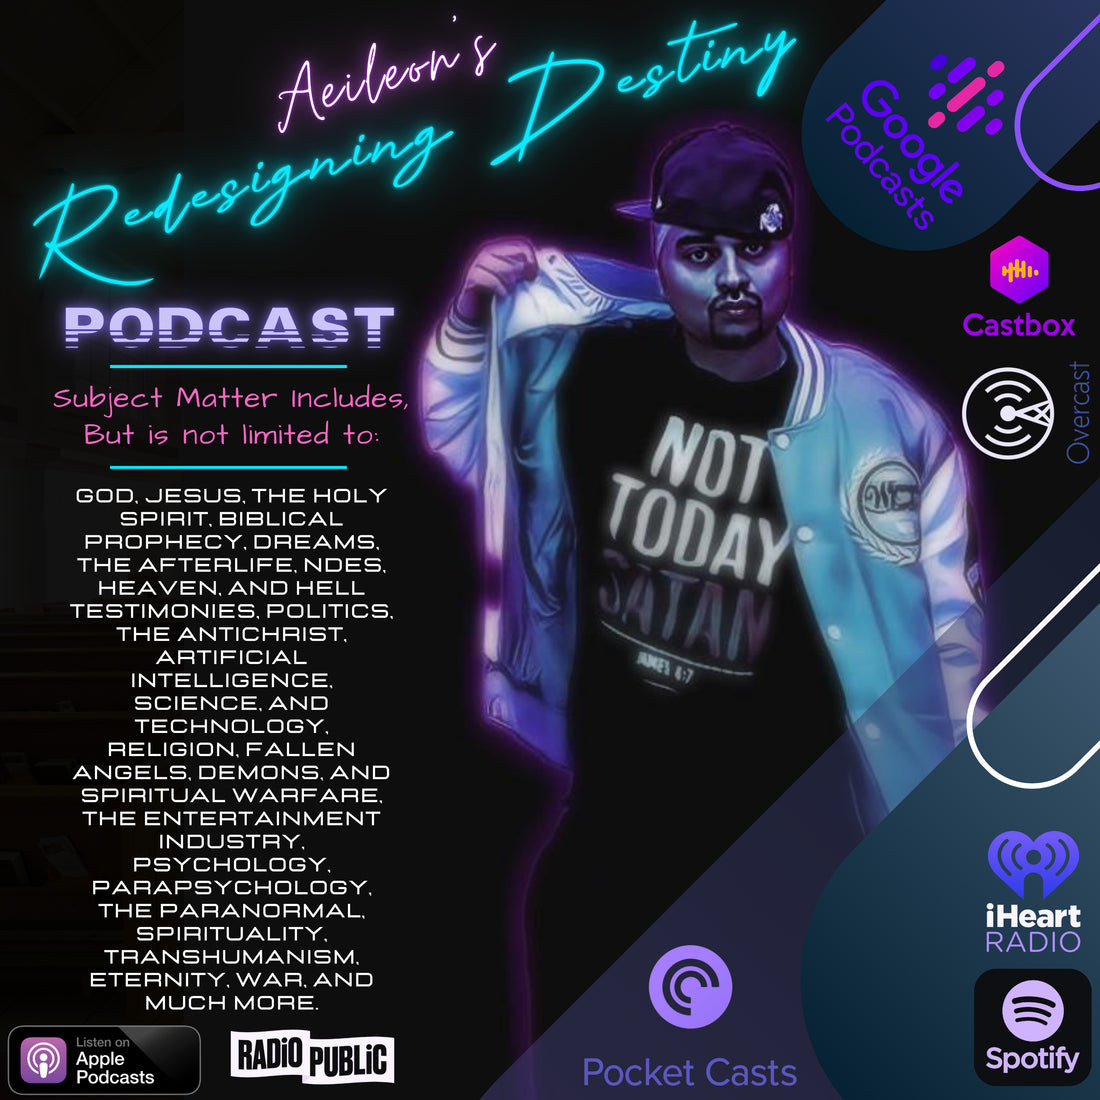 Redesigning Destiny Podcast